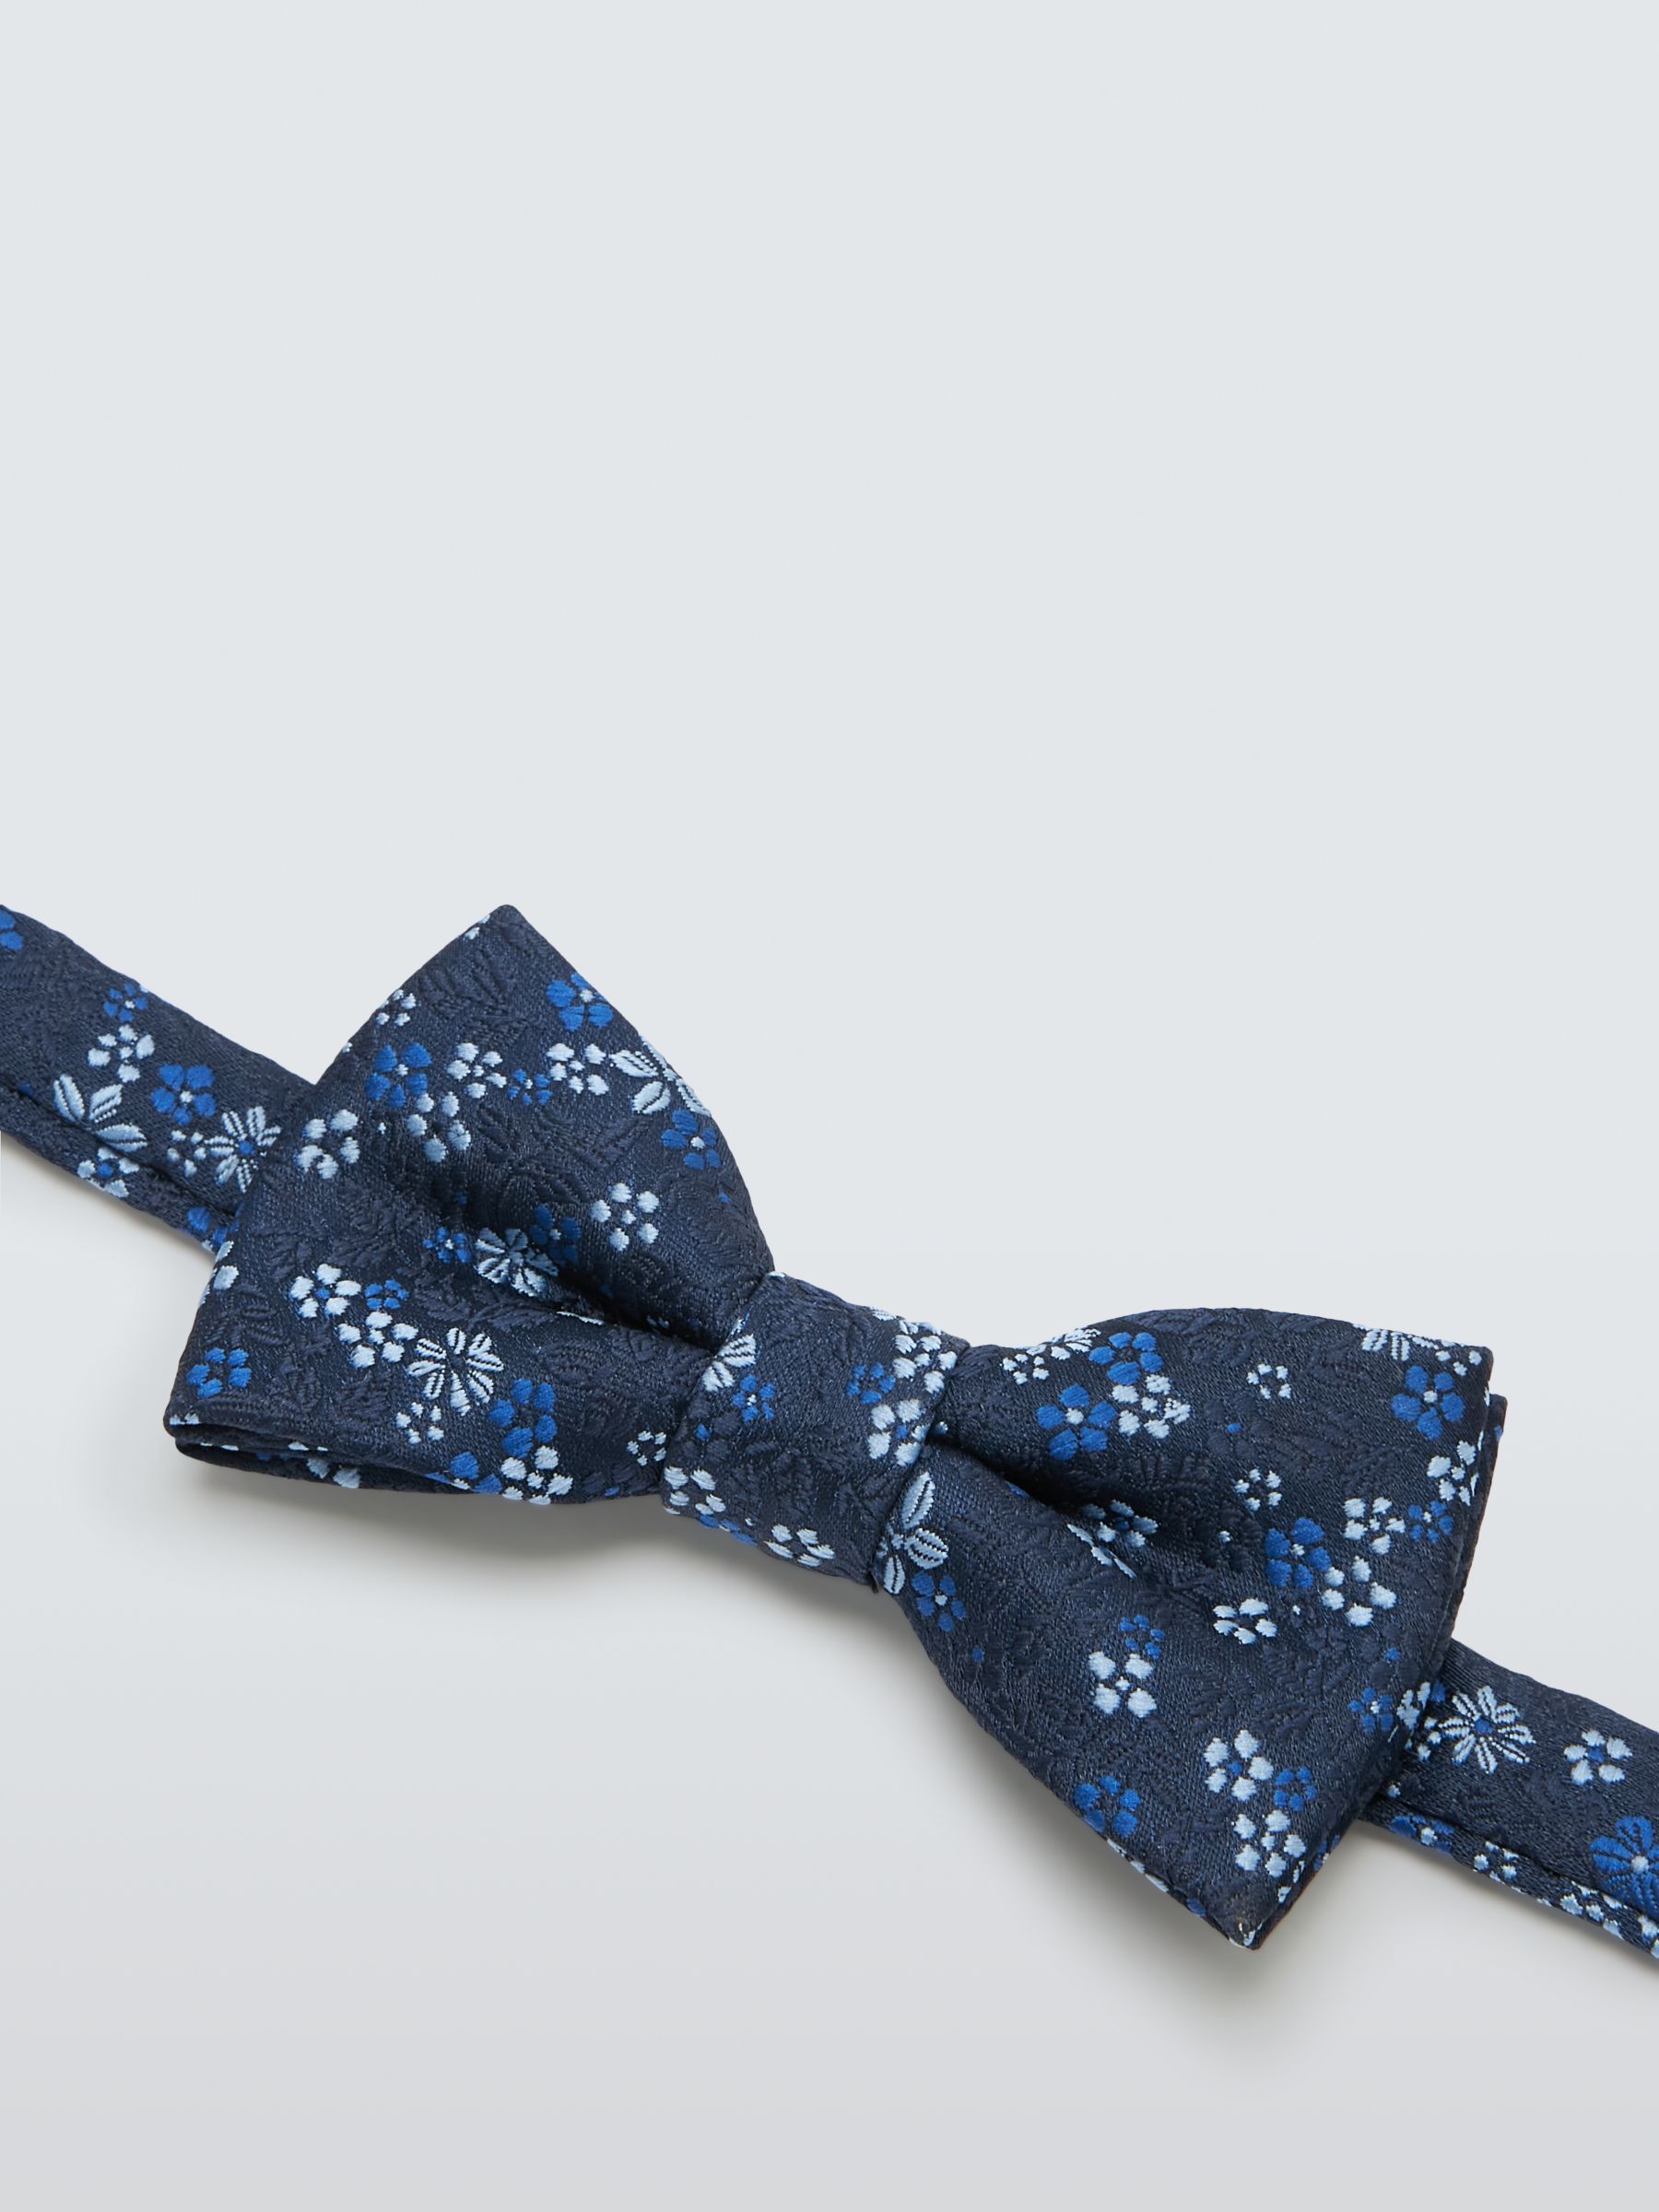 John Lewis Kids' Floral Bow Tie, Navy, S-M